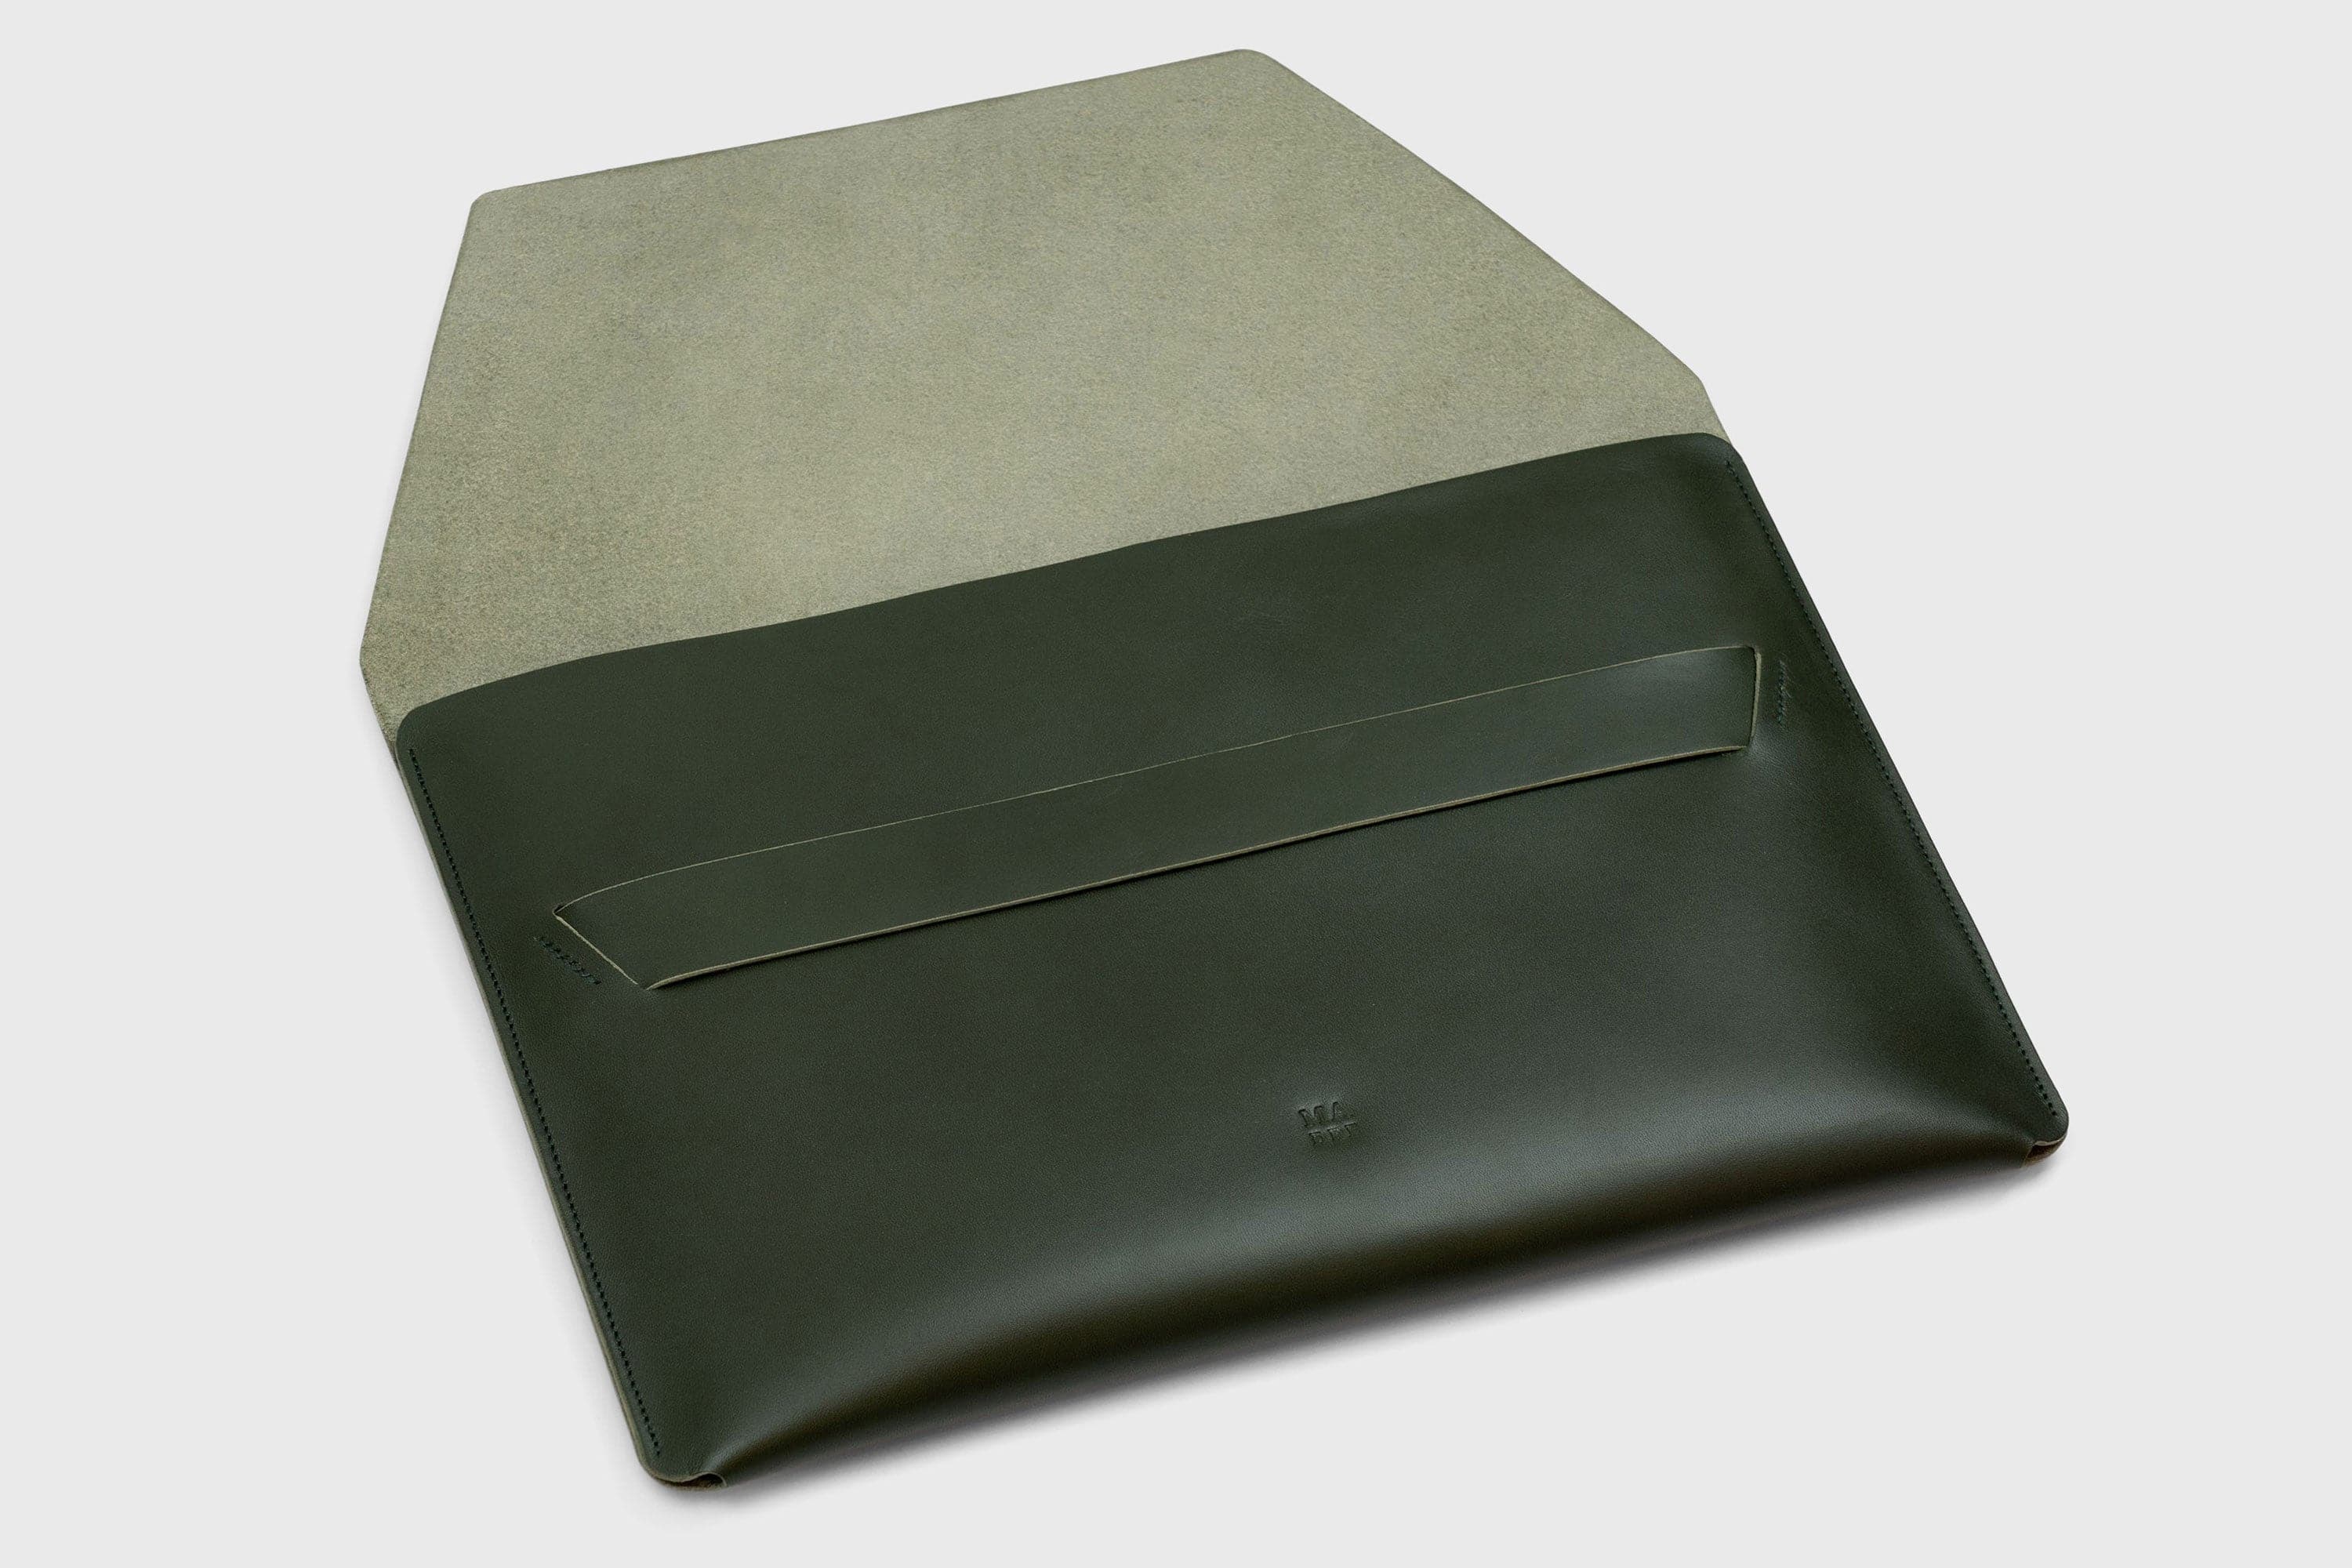 MacBook Pro 14 Inch Leather Sleeve Dark Olive Green Color Vachetta Handmade and Designed By Manuel Dreesmann Atelier Madre Barcelona Spain